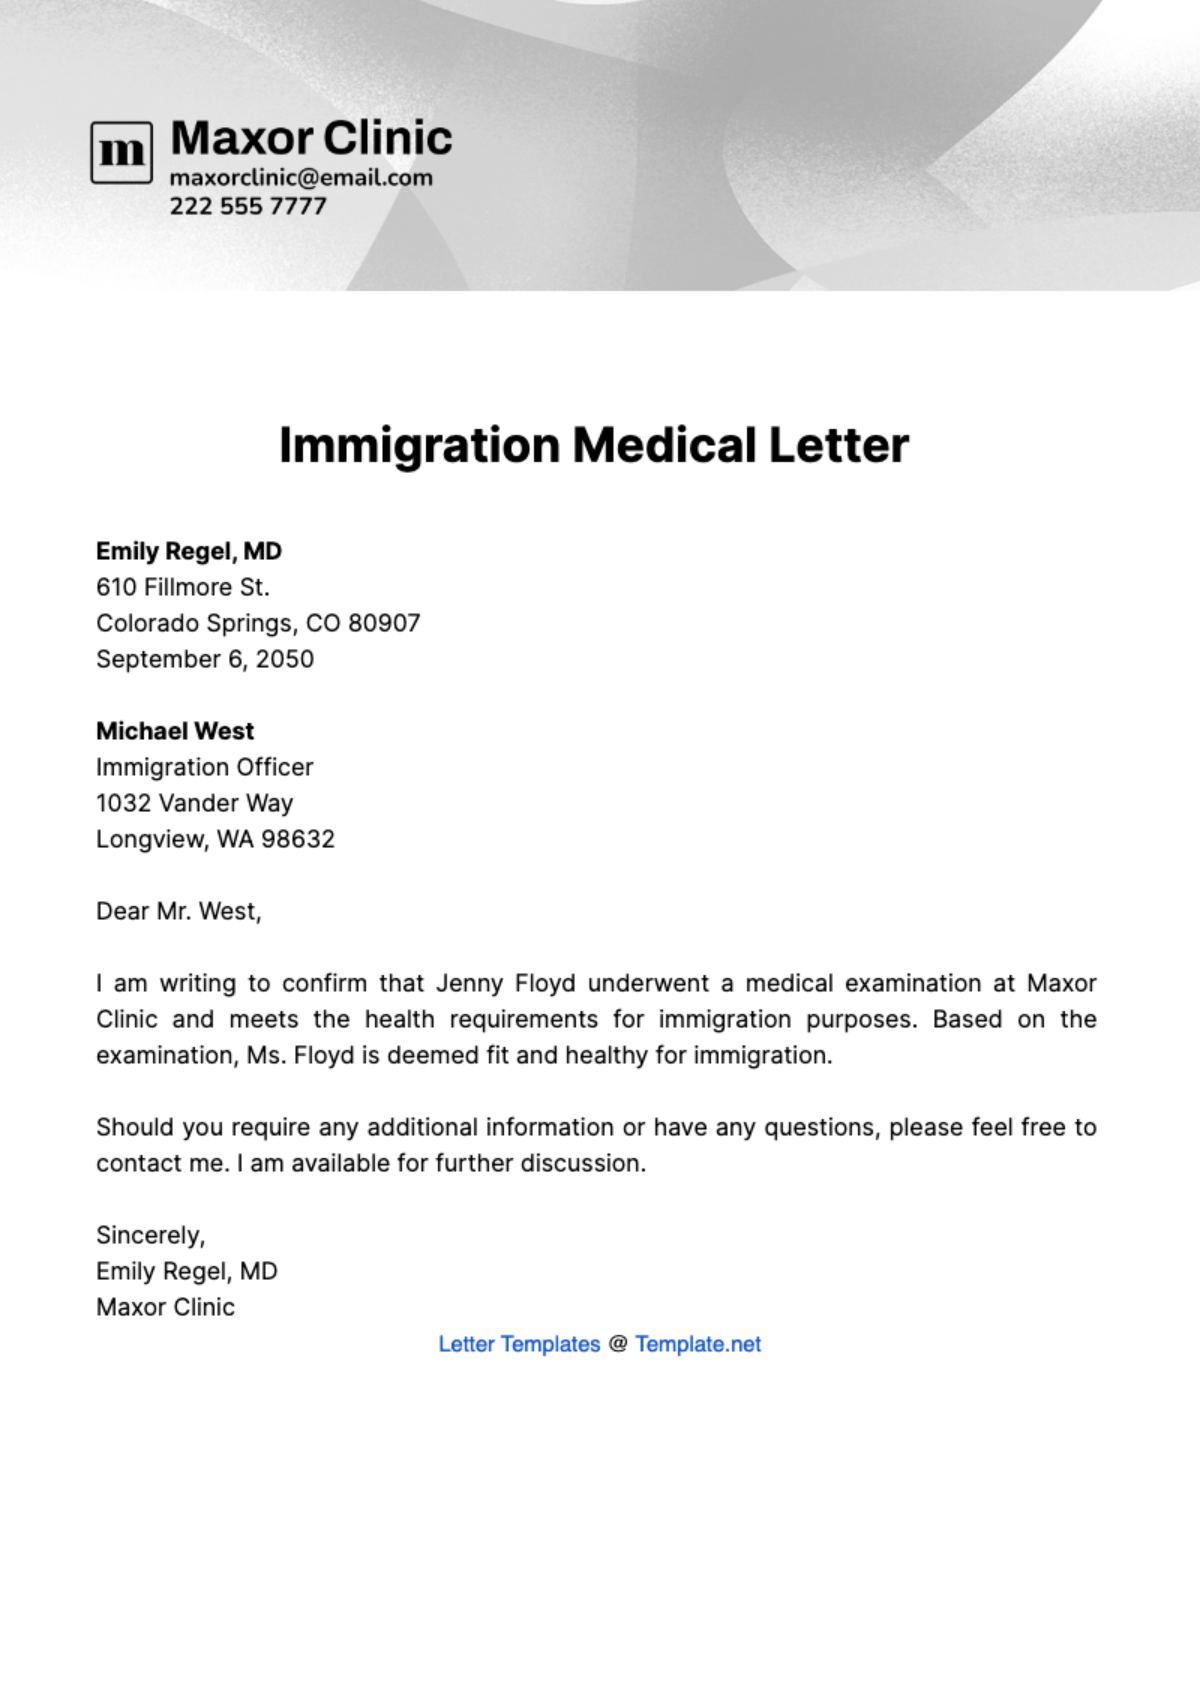 Immigration Medical Letter Template